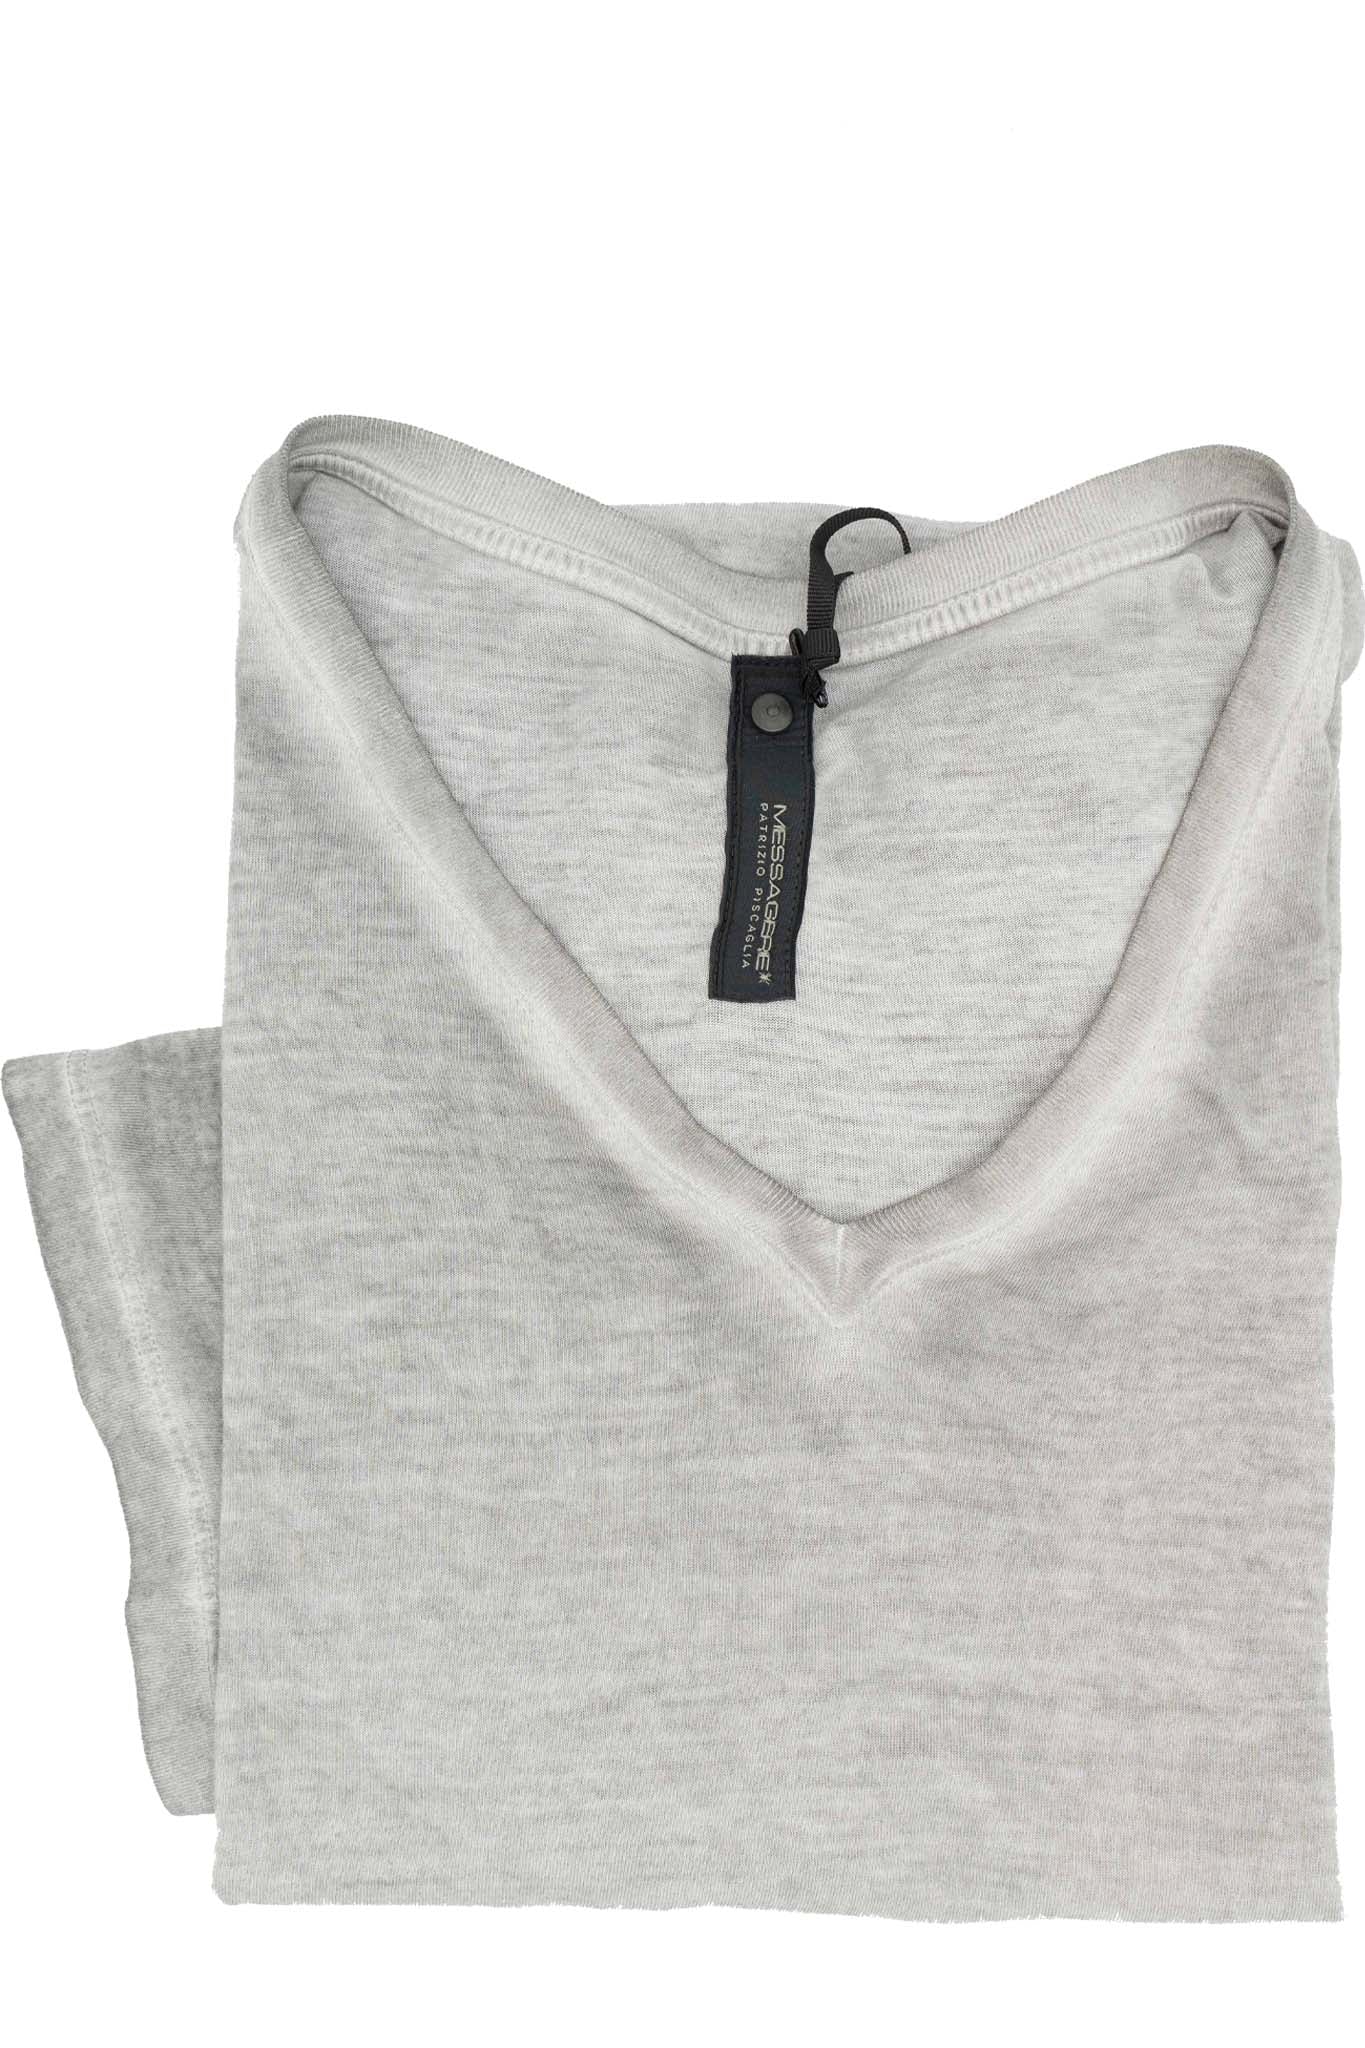 Short sleeve grey t-shirt